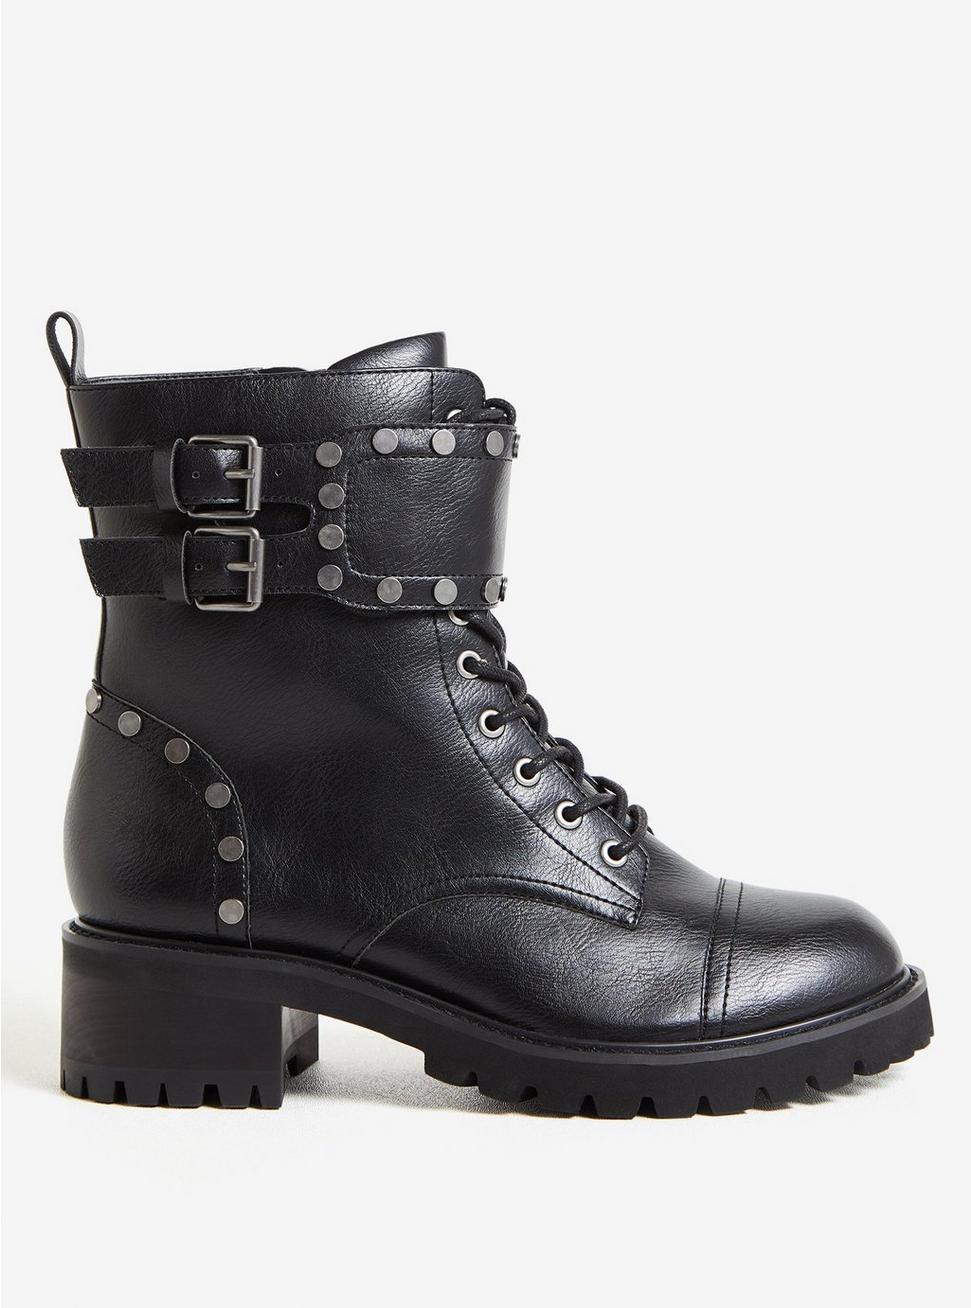 Plus Size - Black Faux Leather Studded Combat Bootie (WW) - Torrid